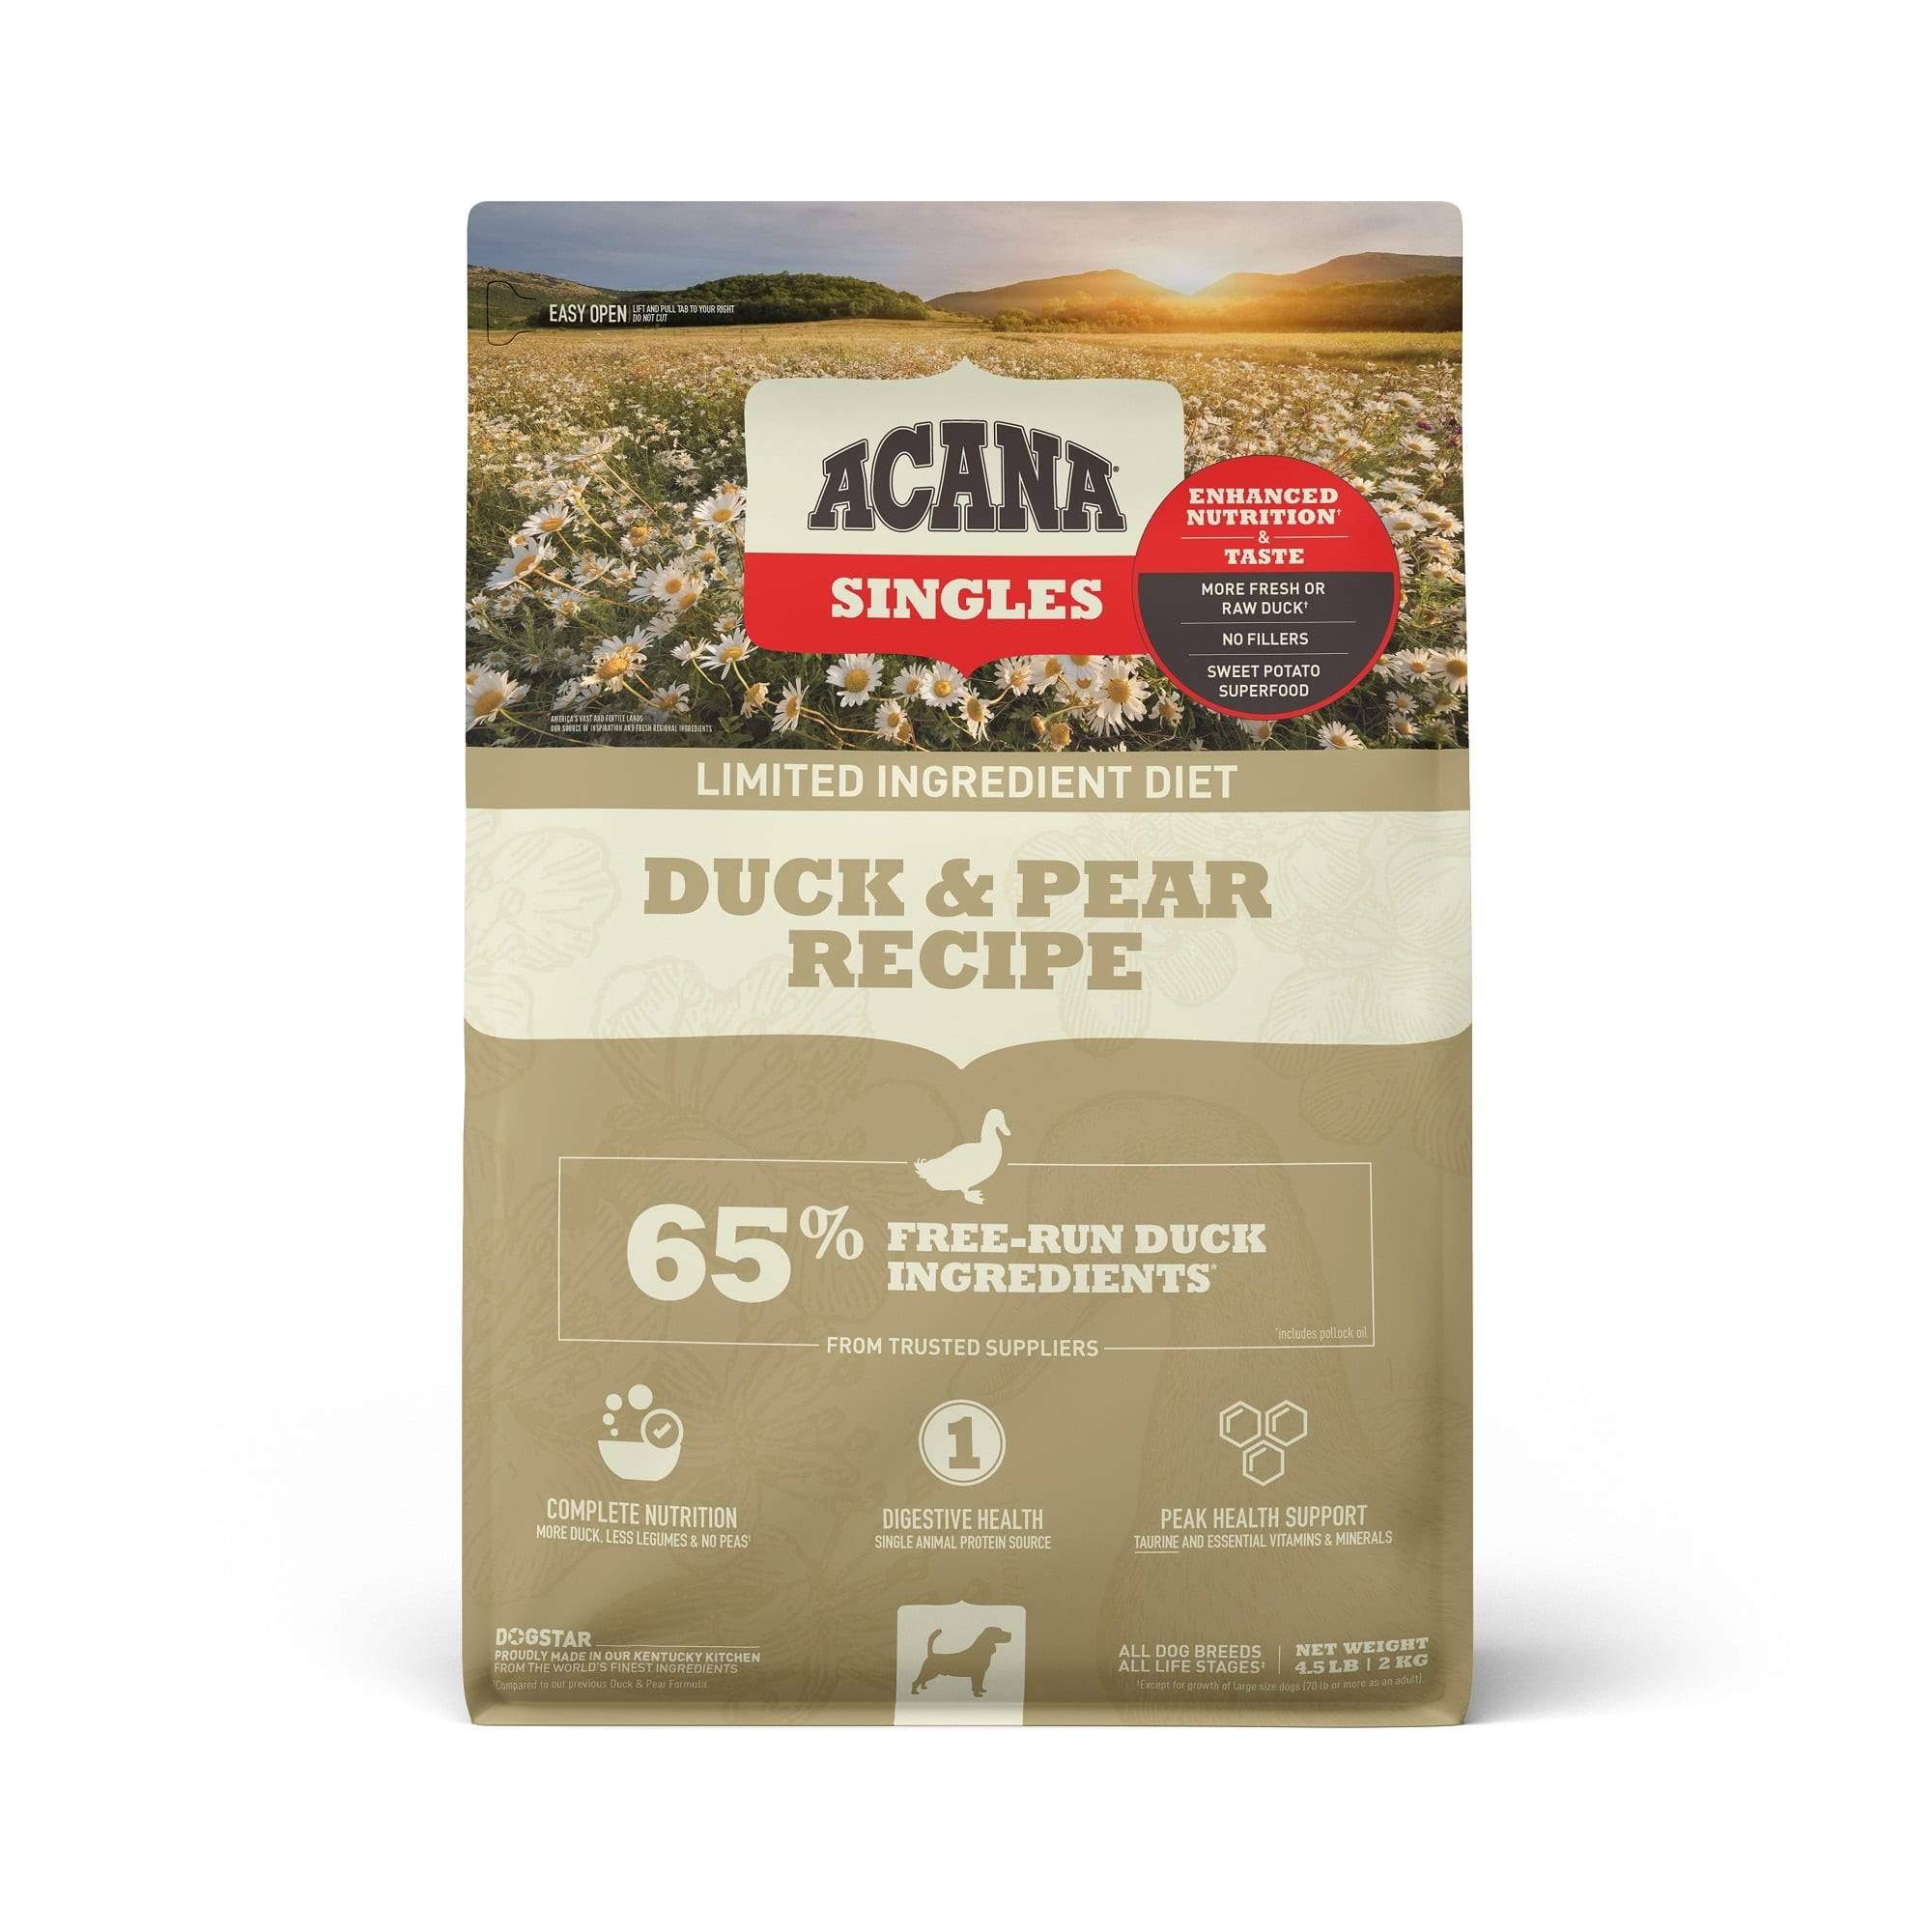 Acana Singles Limited Ingredient Duck & Pear Recipe Grain-Free Dry Dog Food - 4.5 lb. Bag